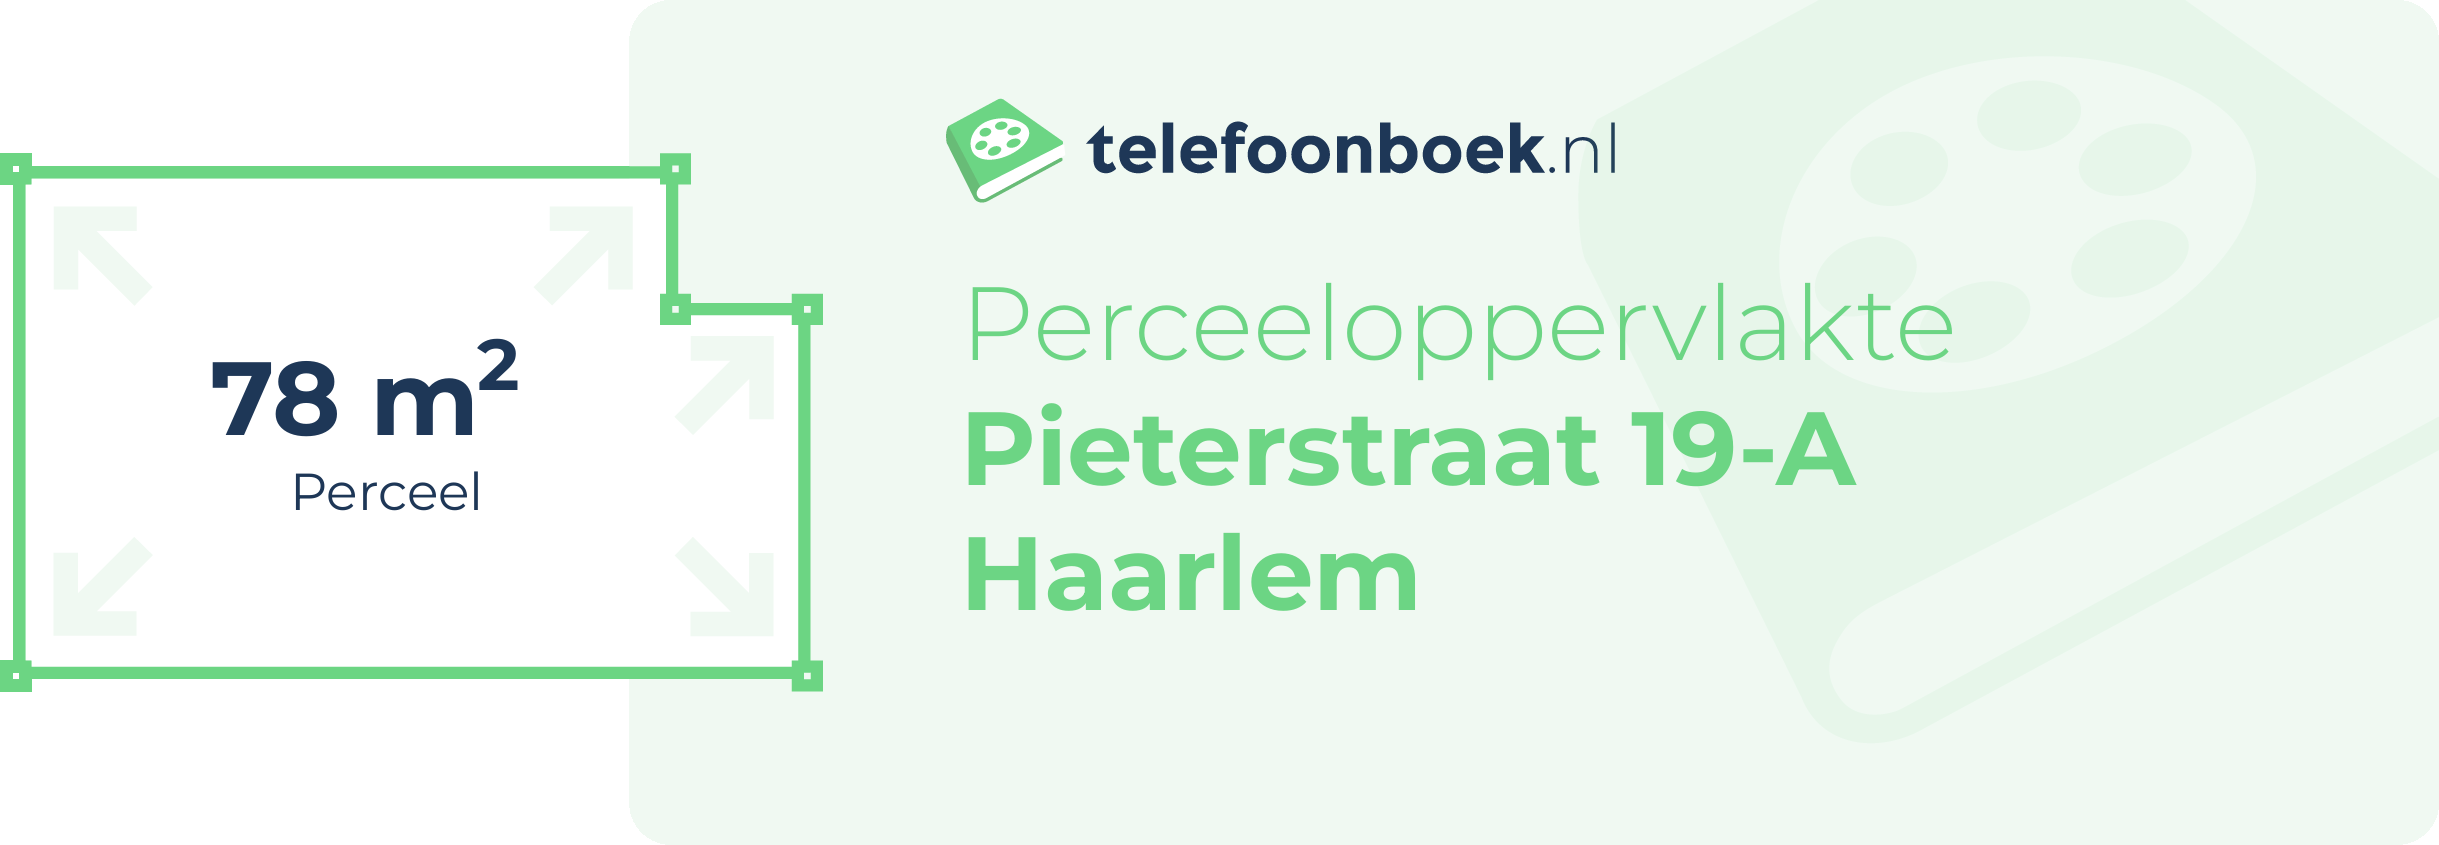 Perceeloppervlakte Pieterstraat 19-A Haarlem